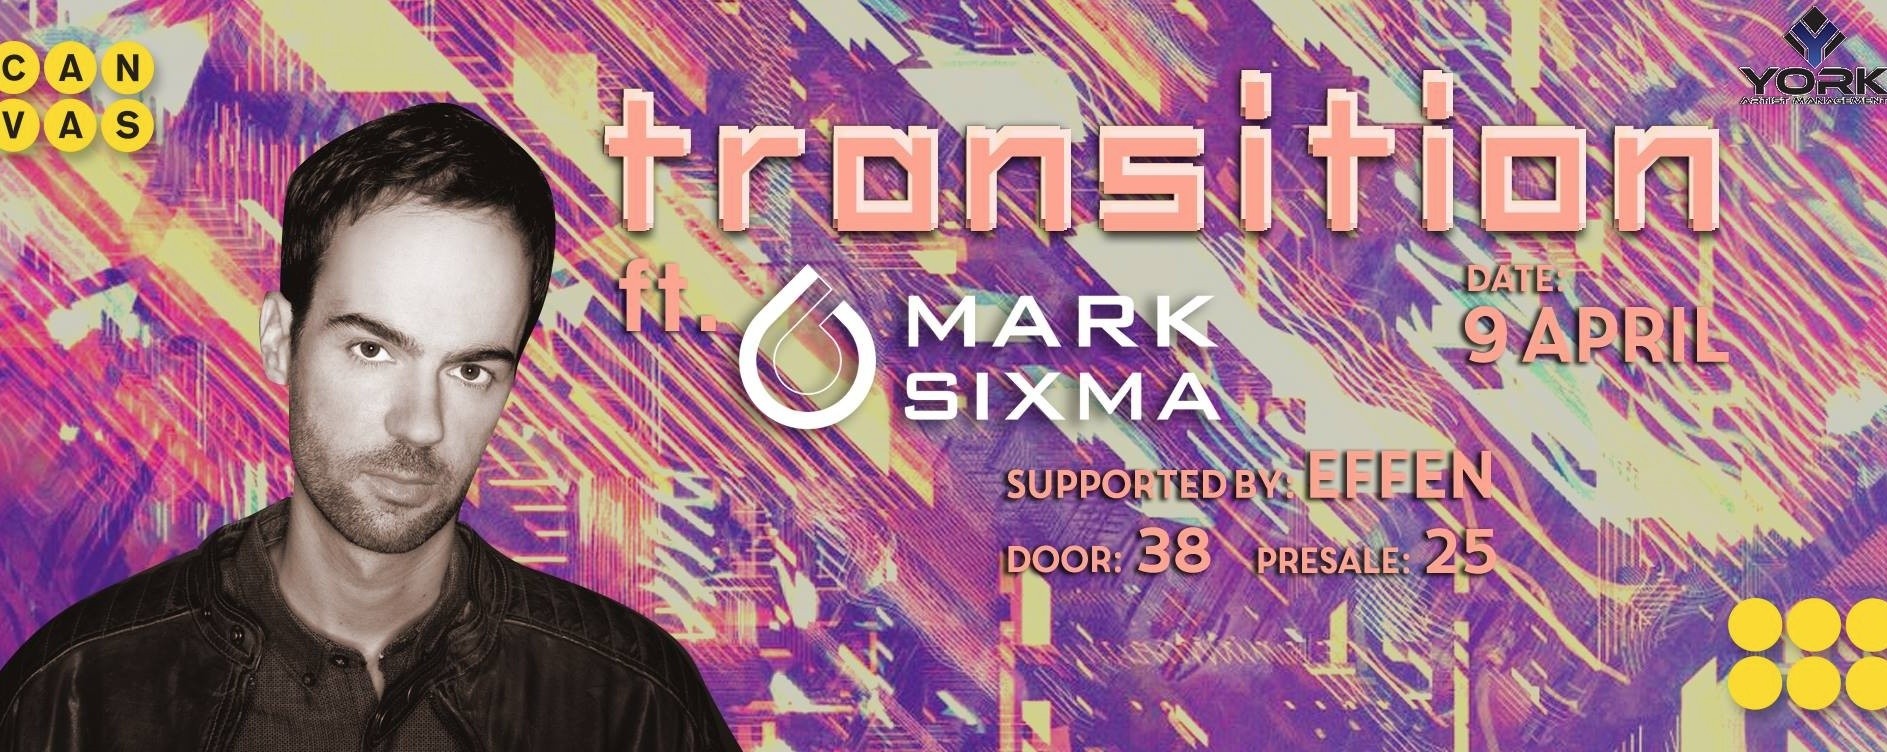 Transition ft. Mark Sixma